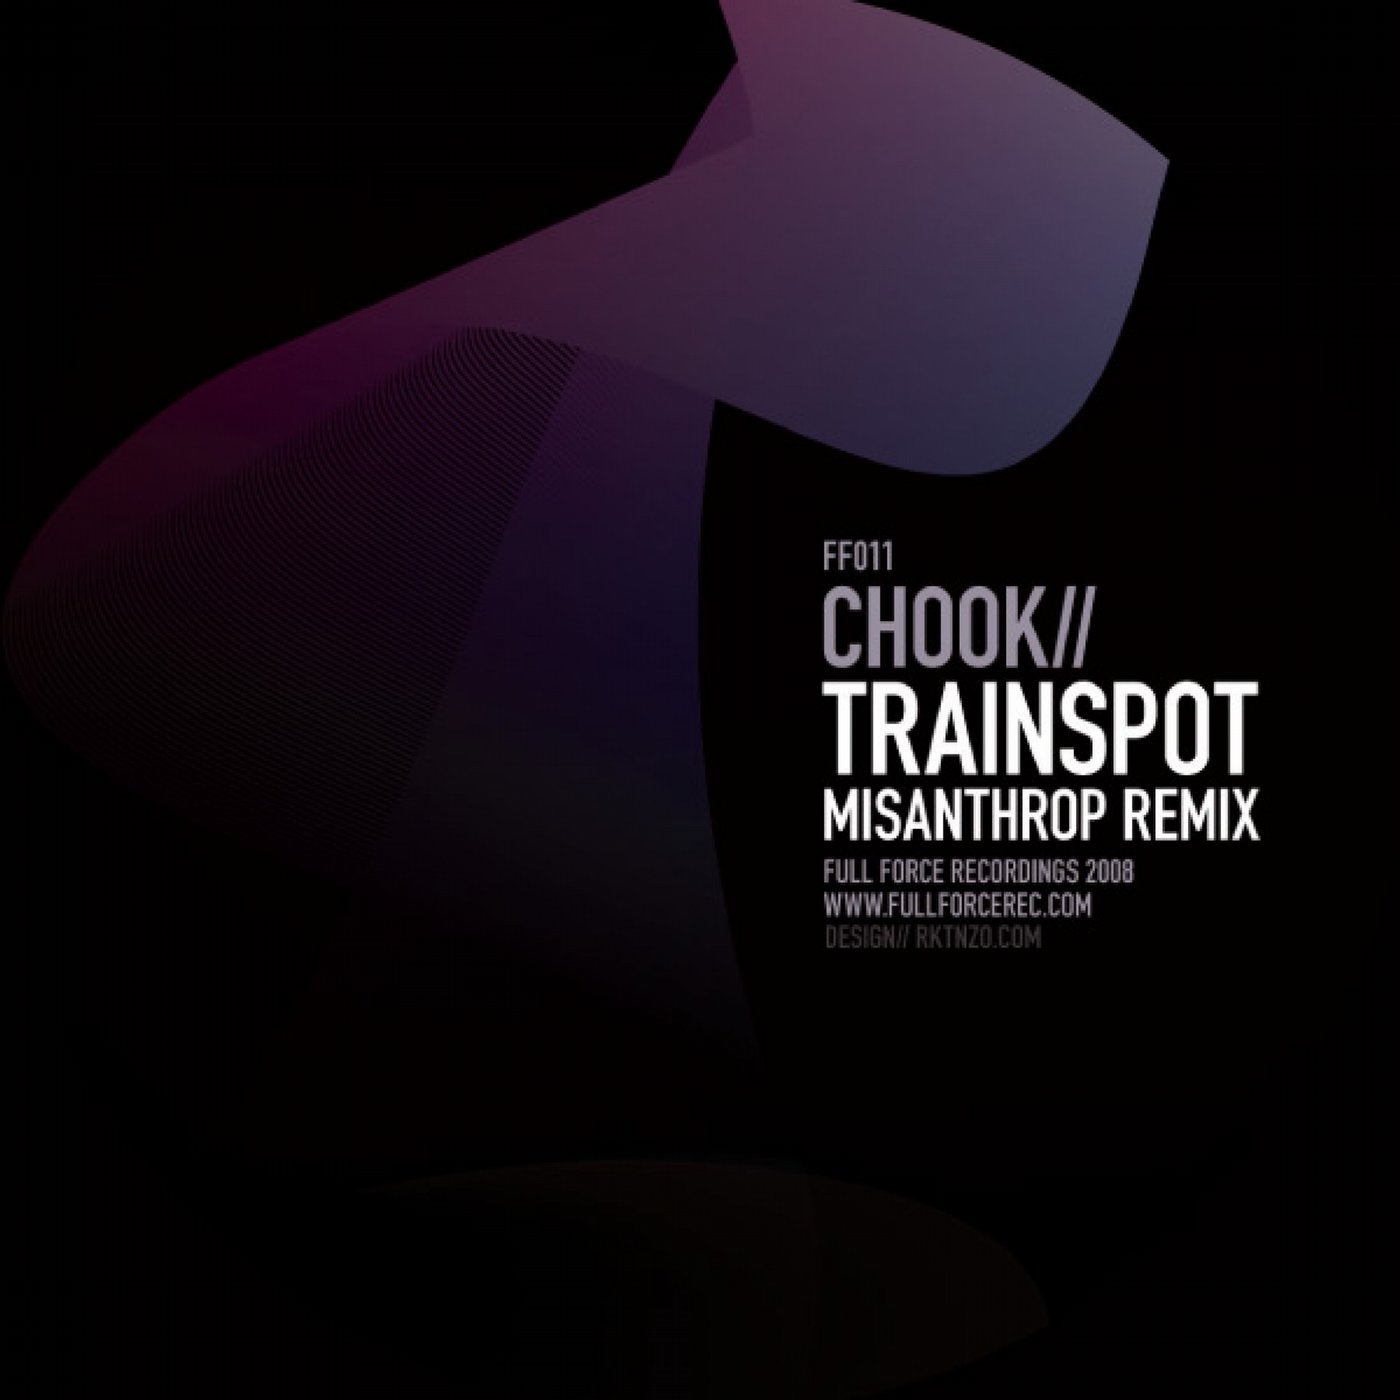 Trainspot (Misanthrop Remix)